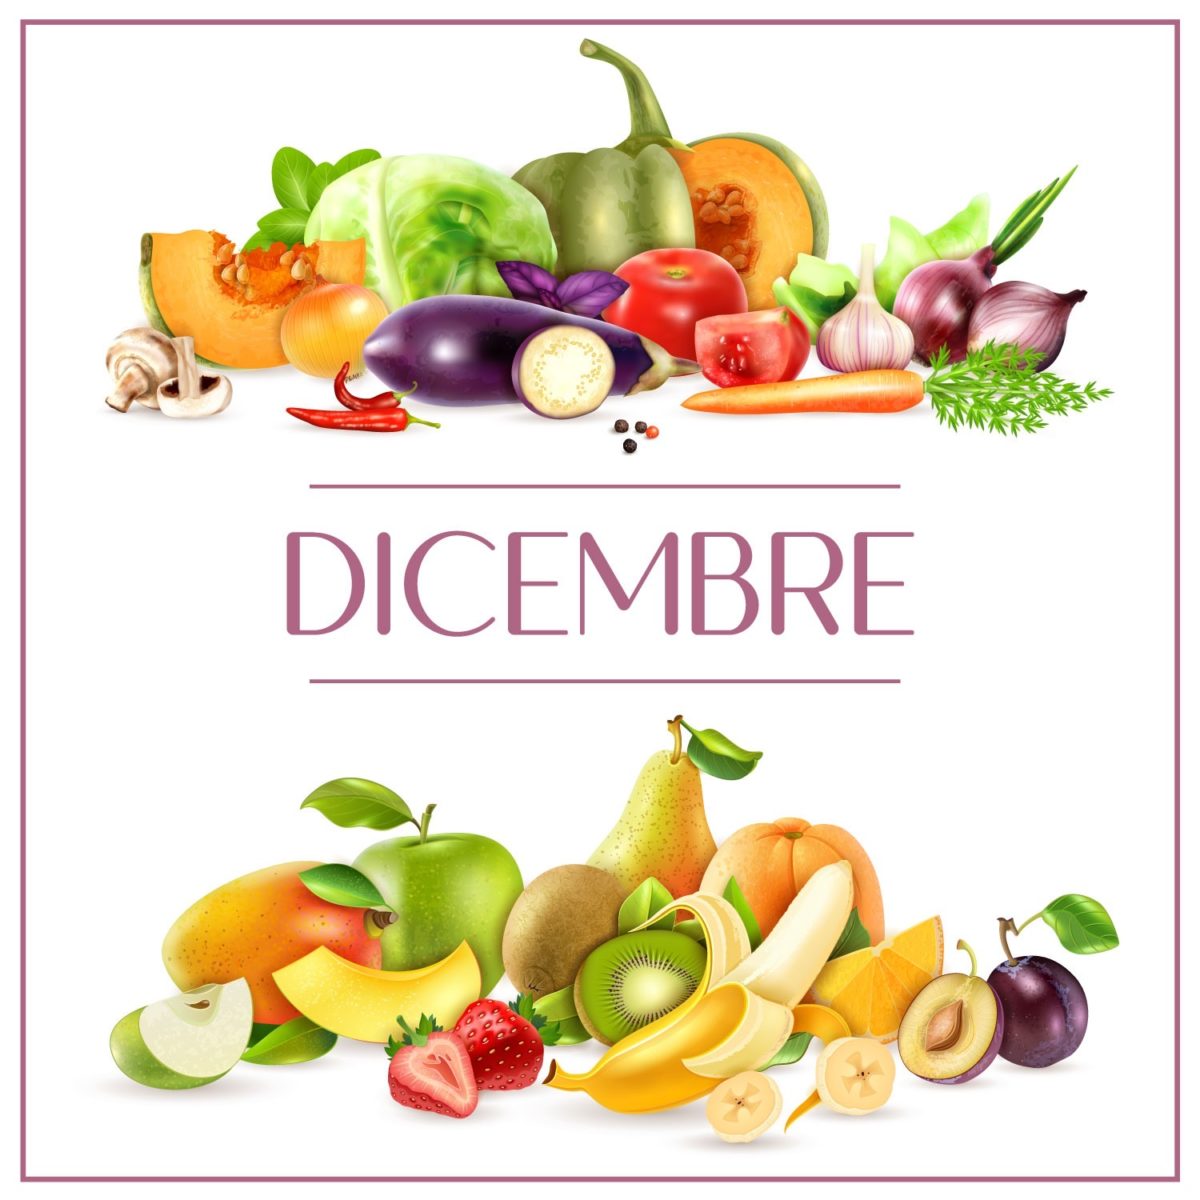 Frutta-e-verdura-Dicembre-B-Woman-1200x1200.jpg